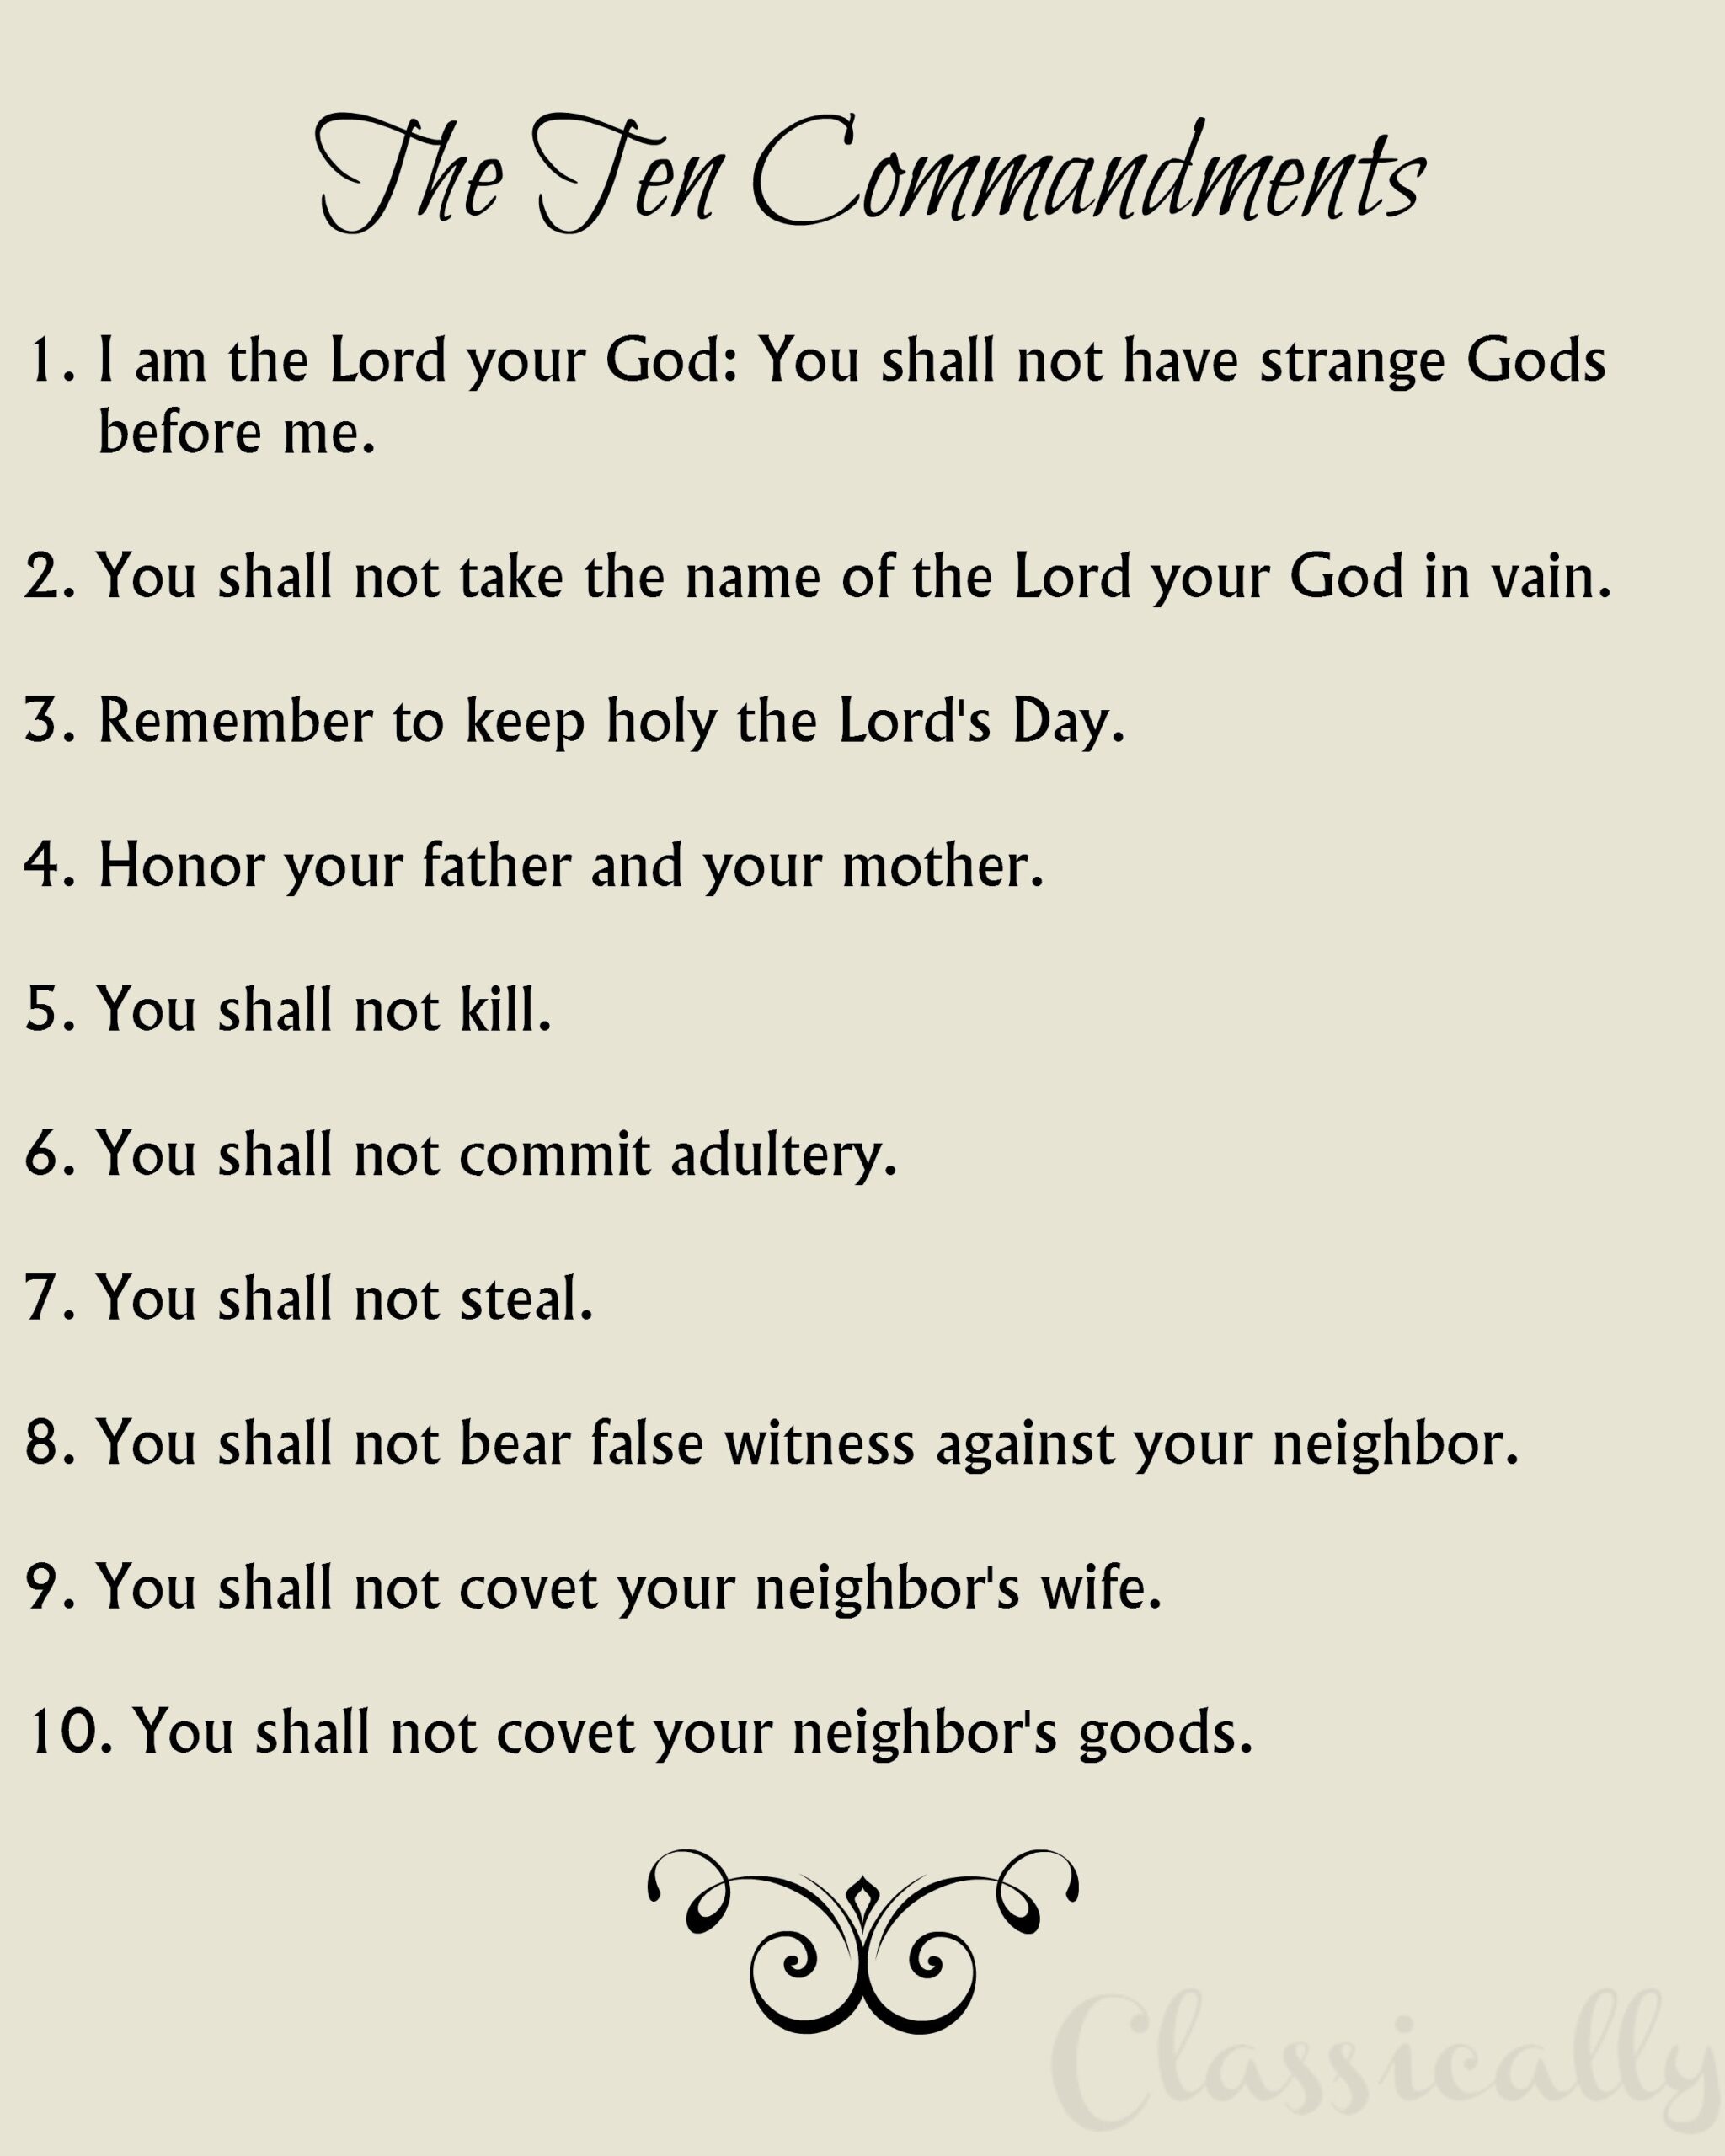 The Ten Commandments Print Catholic Version 8x10 10 Commandments Beige Or White Background Etsy